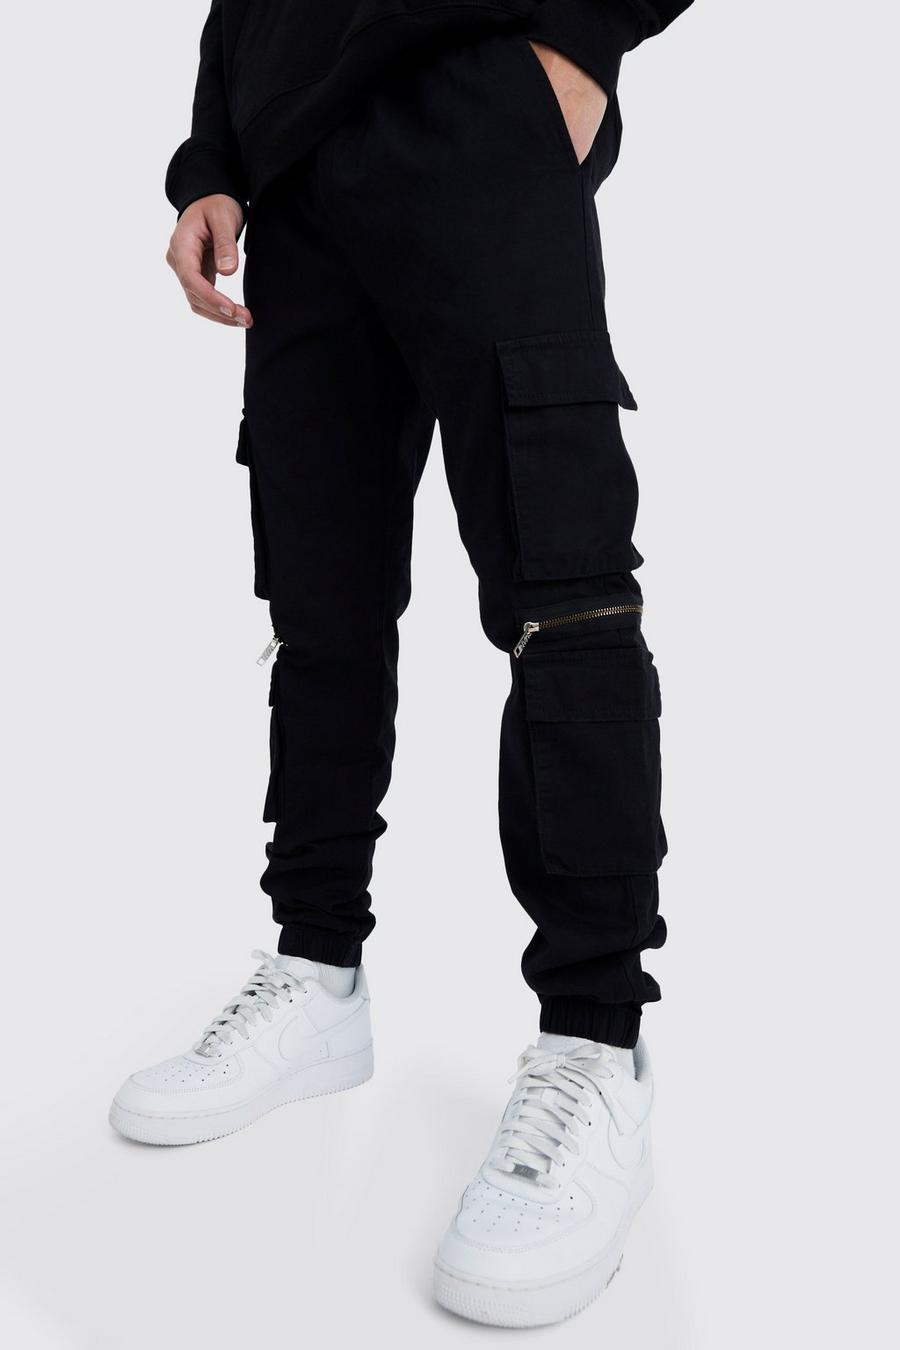 Black Elastic Waist Multi Pocket Zip Cargo Pants